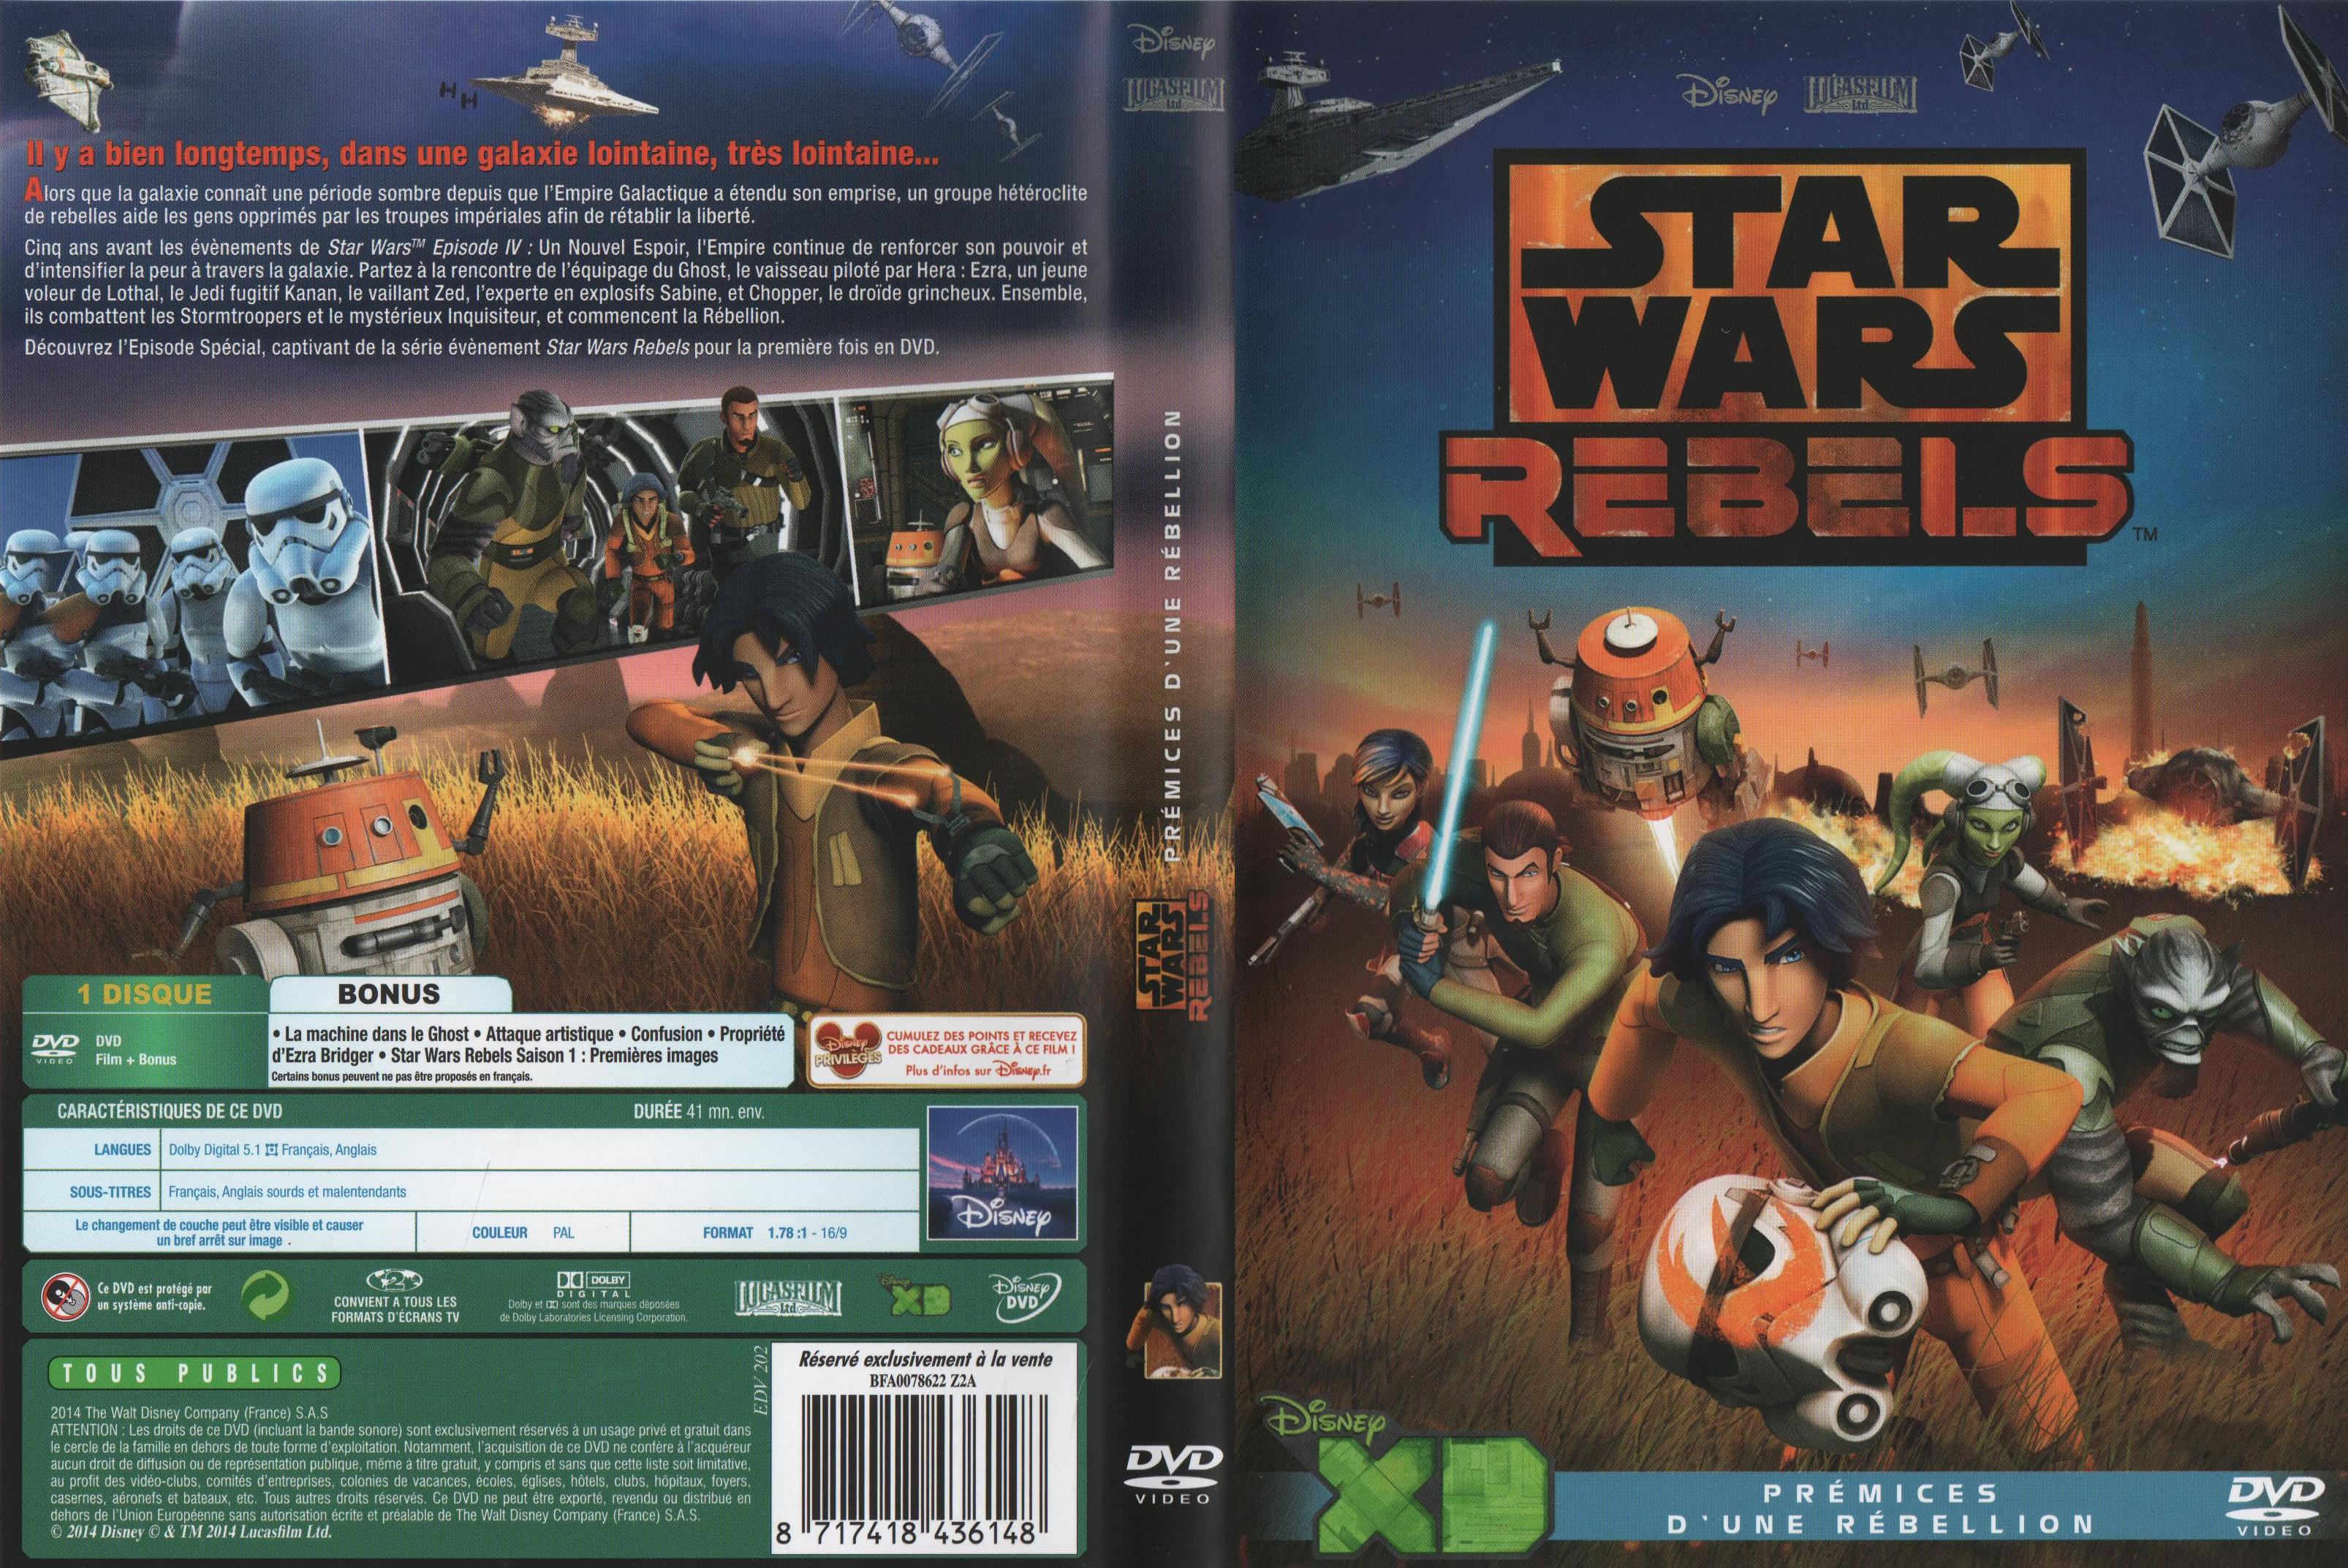 Jaquette DVD Star wars rebels